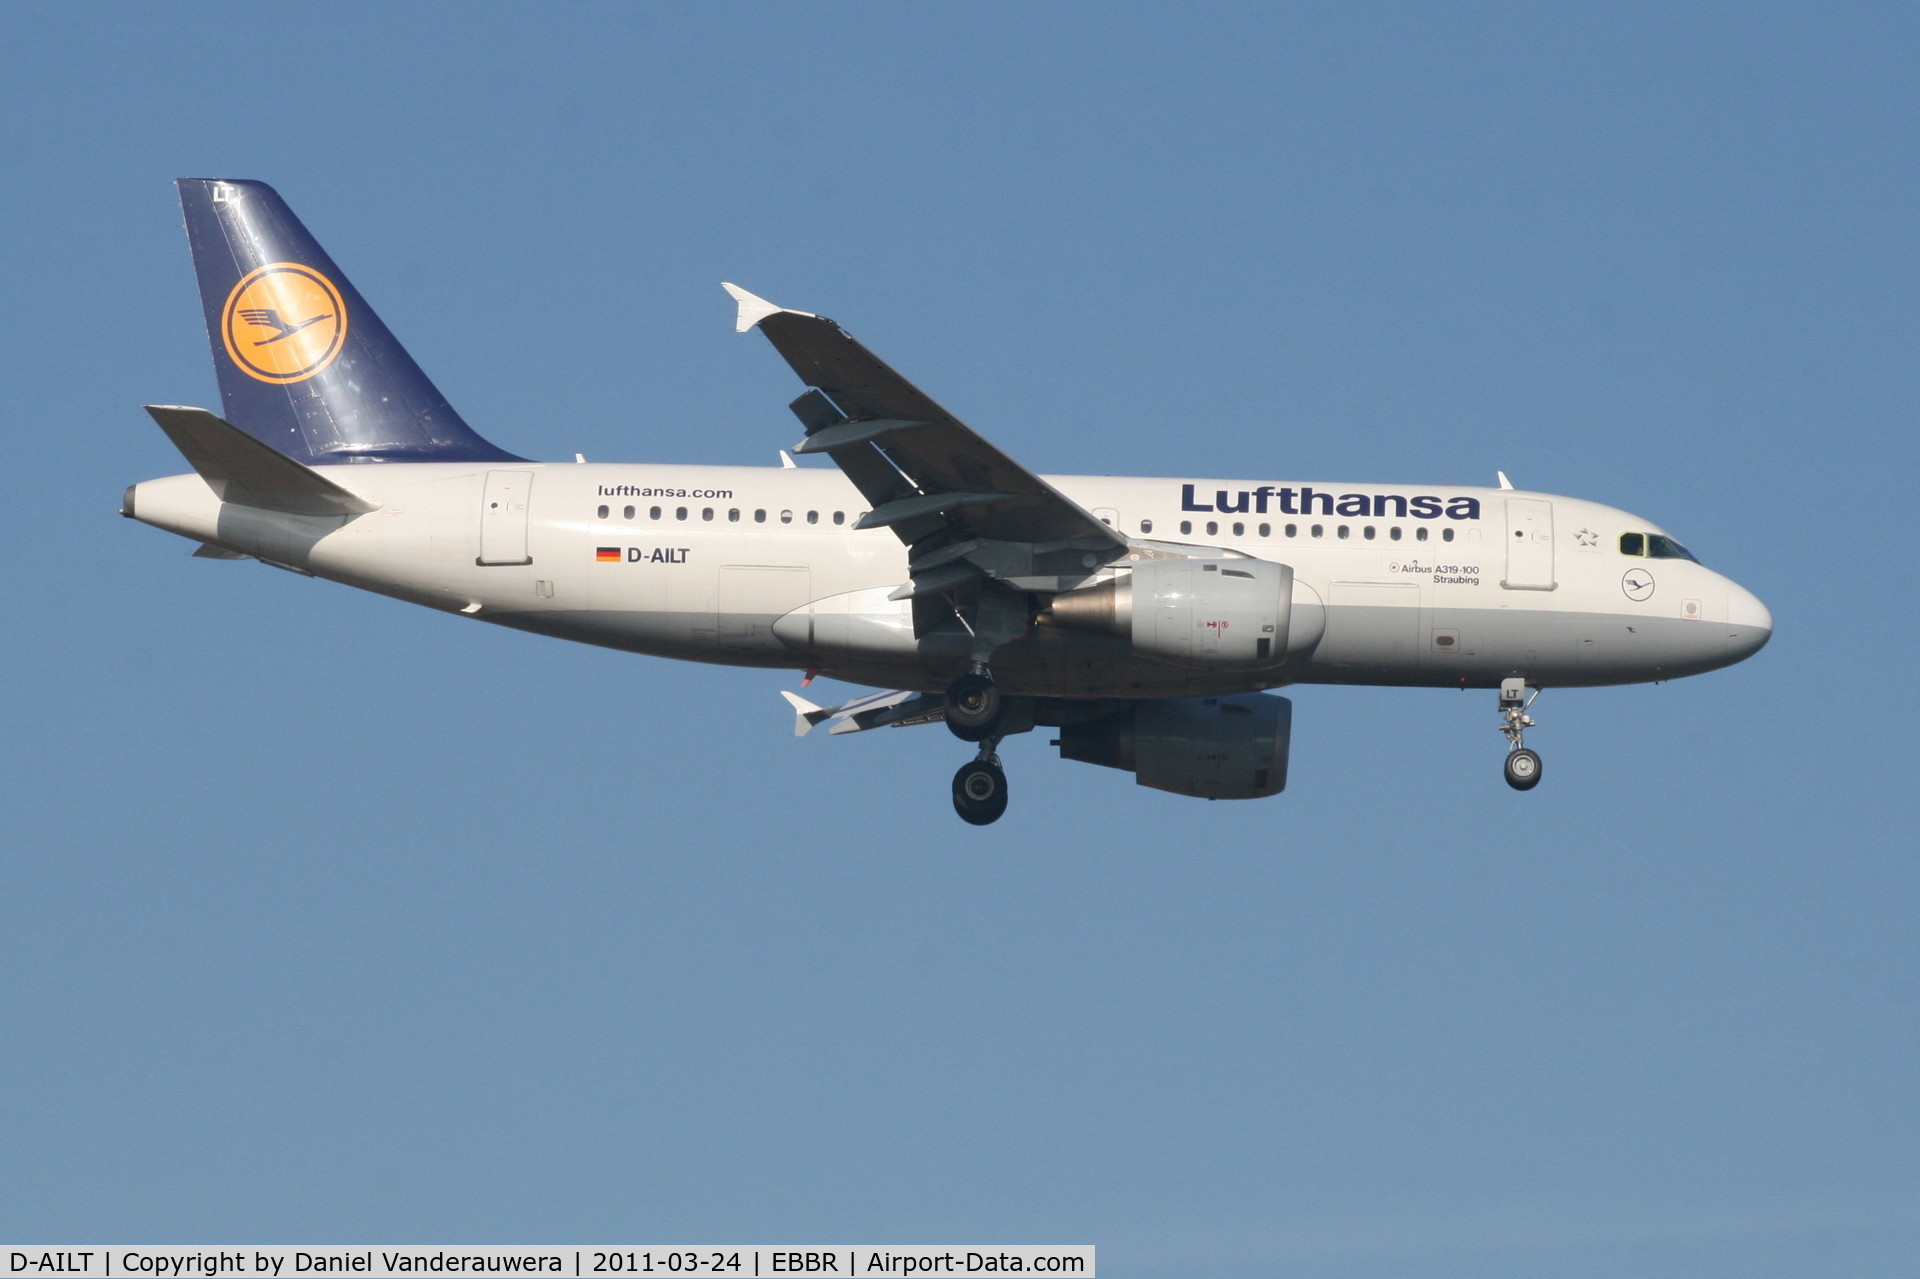 D-AILT, 1997 Airbus A319-114 C/N 738, Flight LH1006 is descending to RWY 02